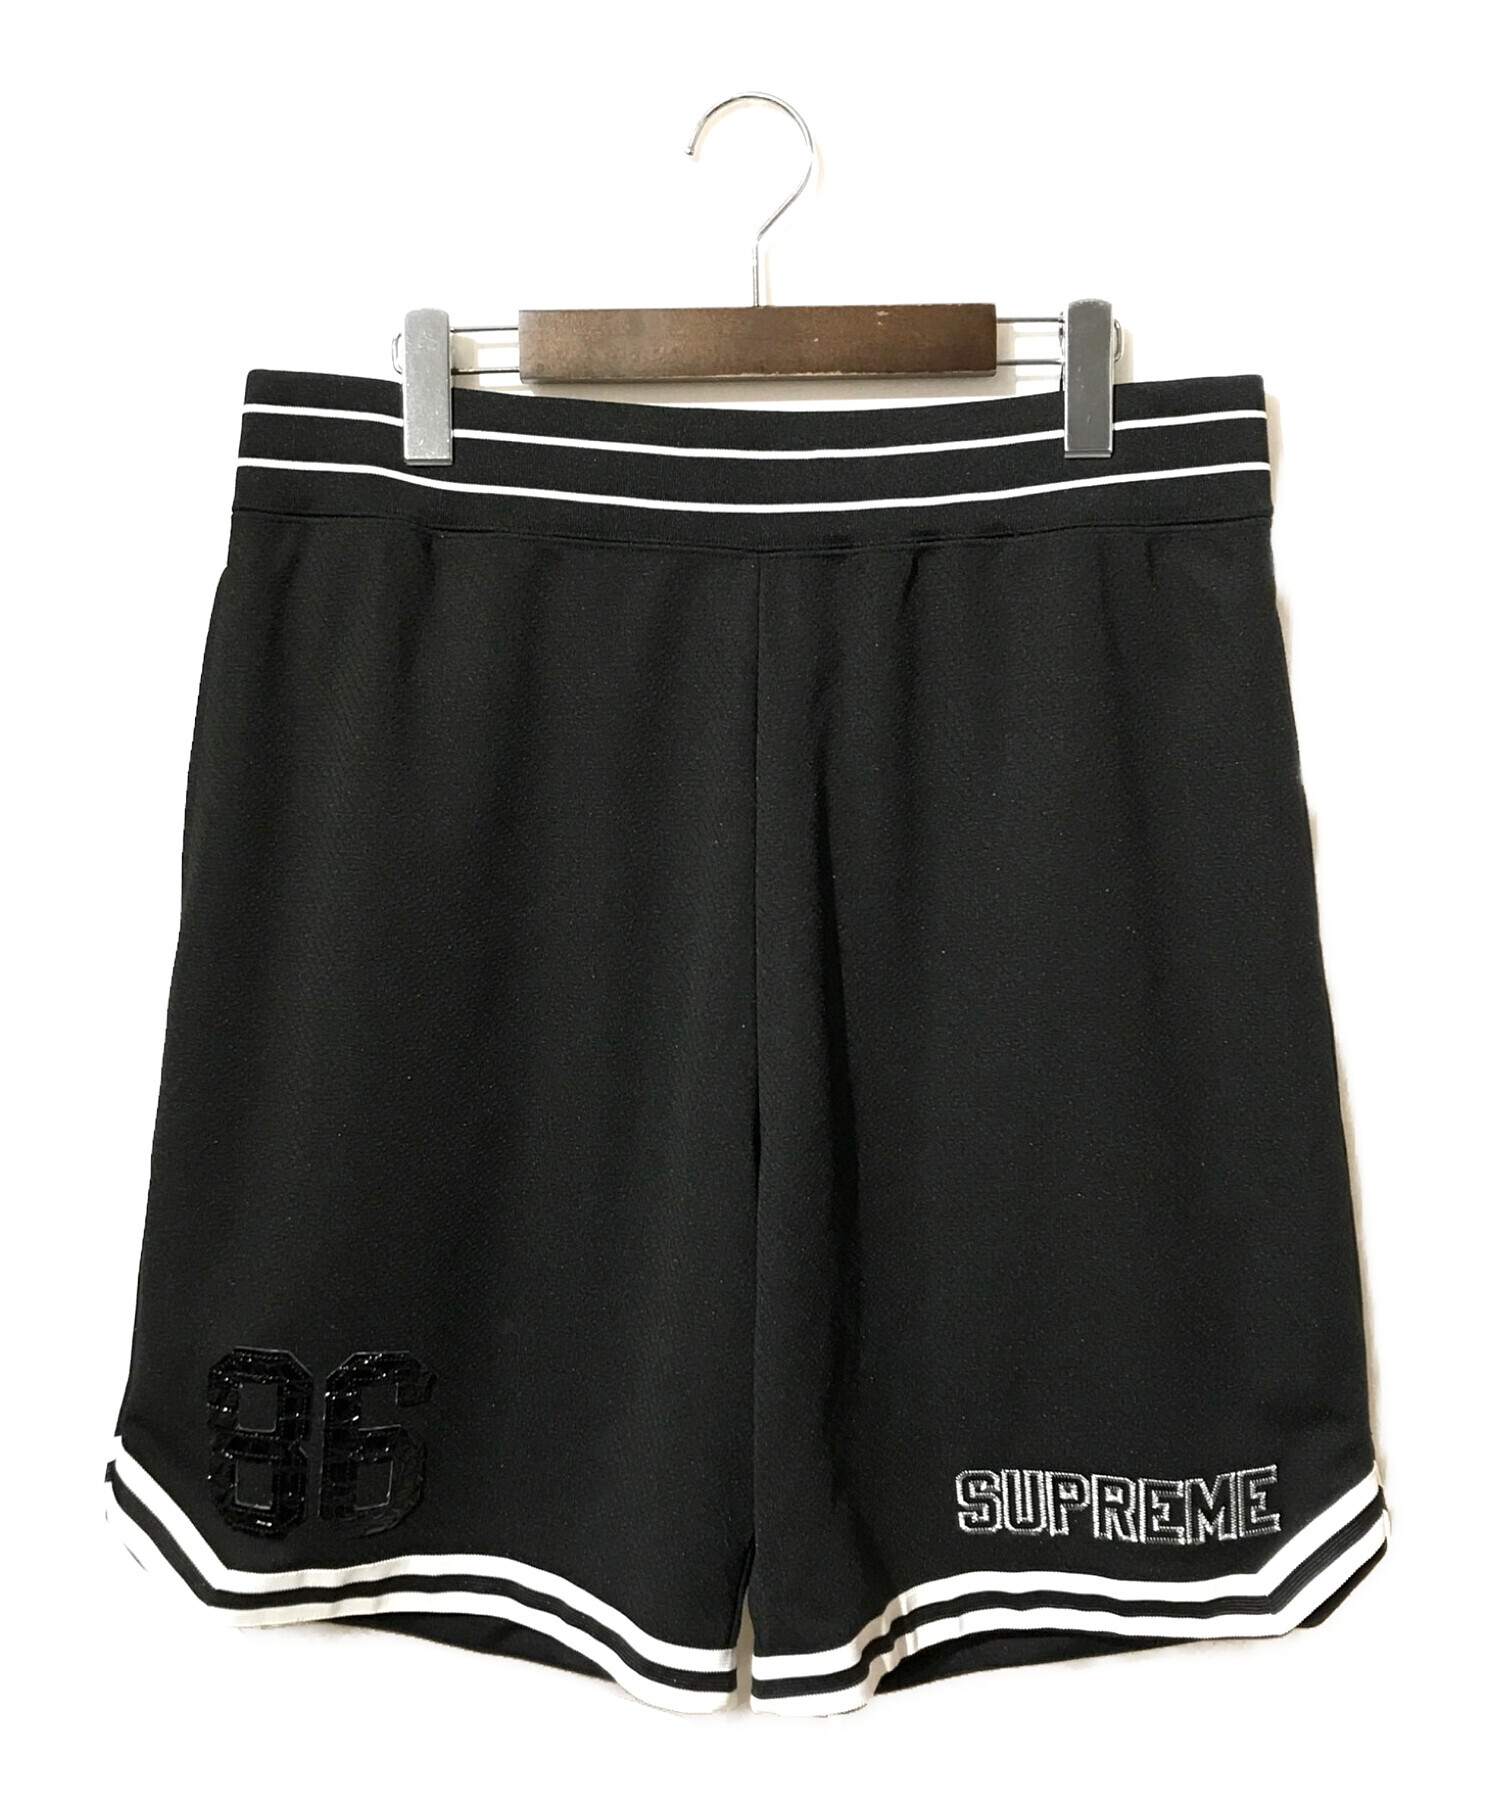 Supreme shorts Large ショーツ